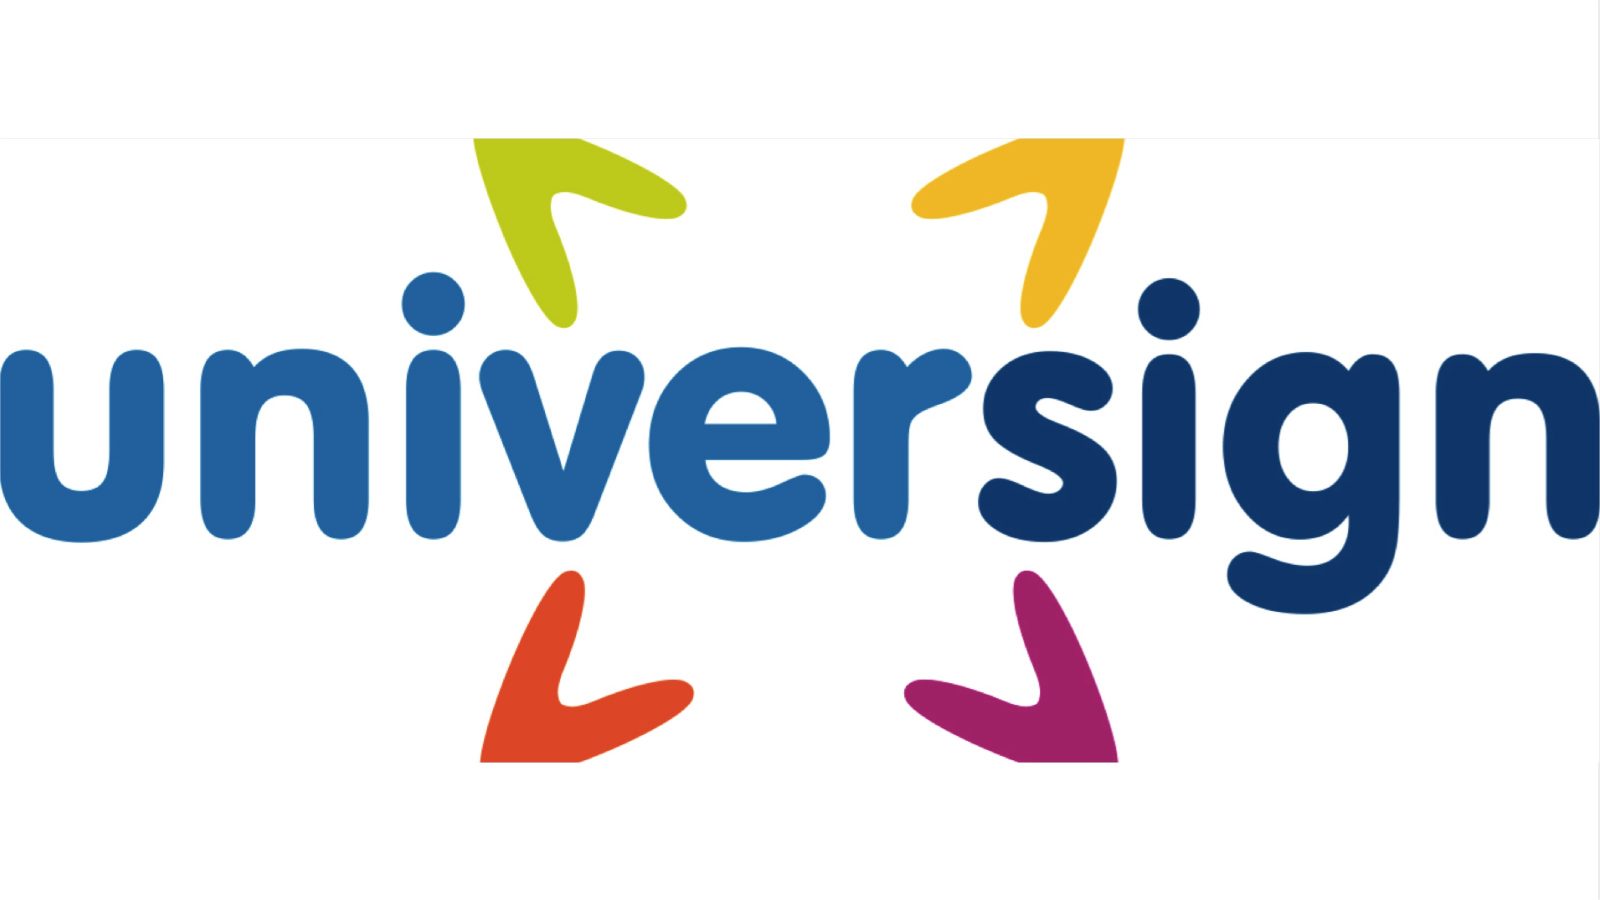 Logo Universign